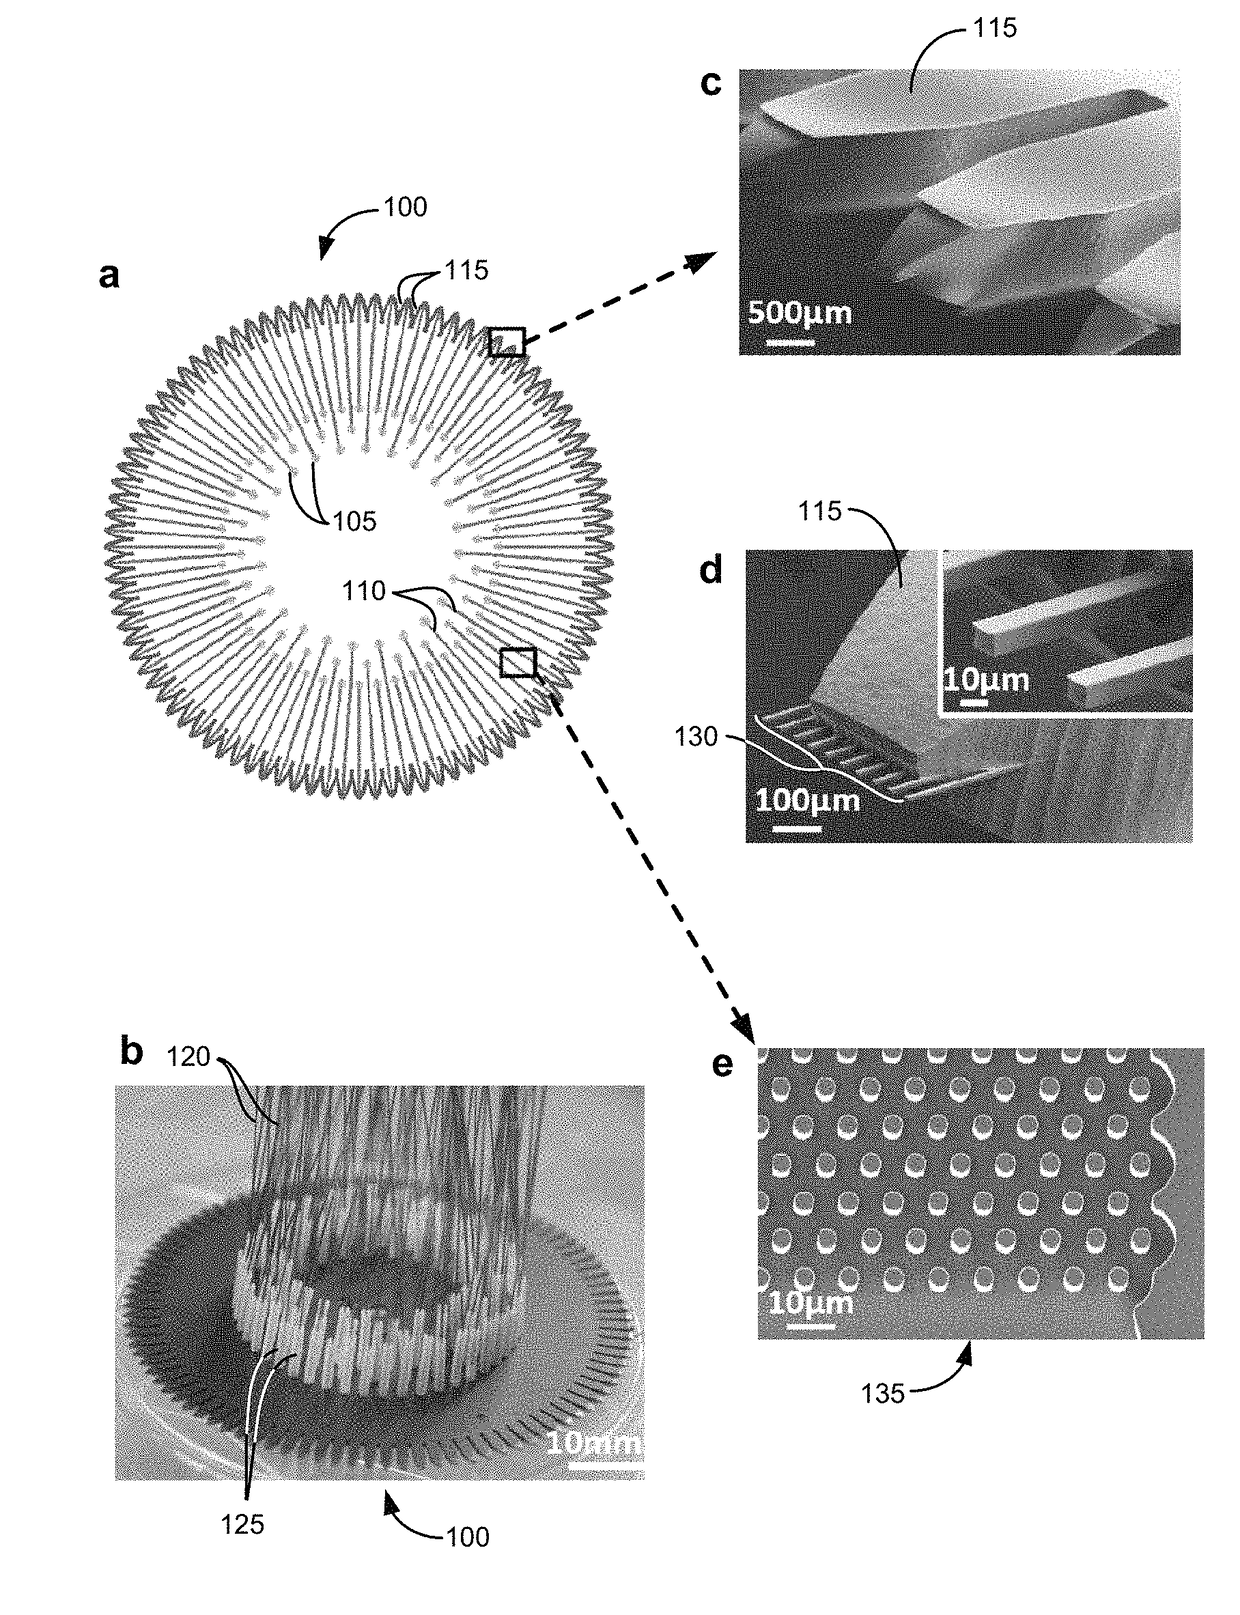 Multinozzle emitter arrays for ultrahigh-throughput nanoelectrospray mass spectrometry